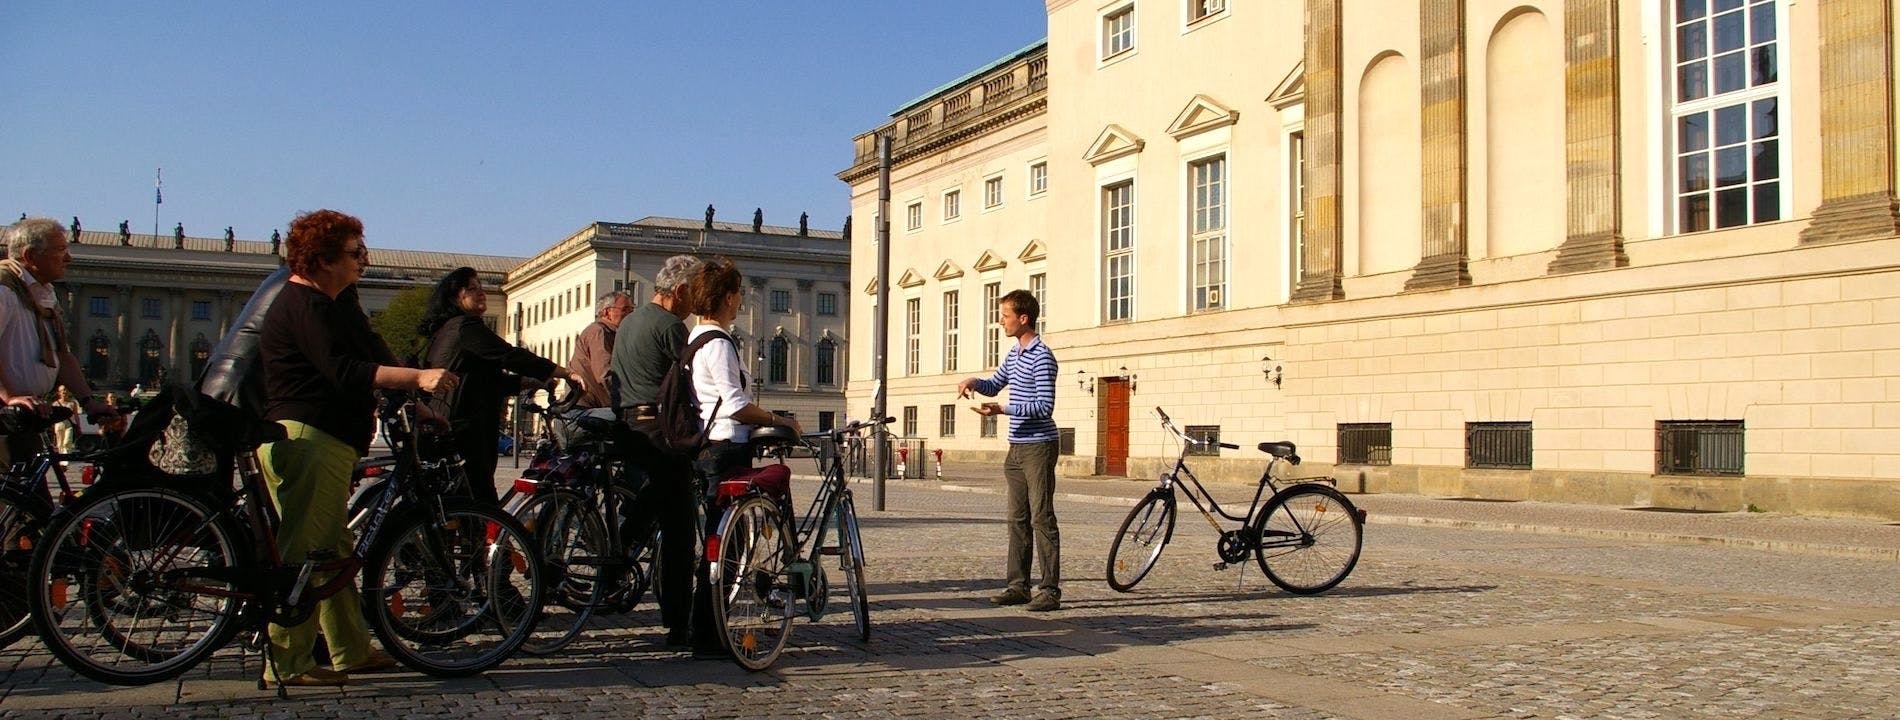 Best of Berlin guided bike tour Musement